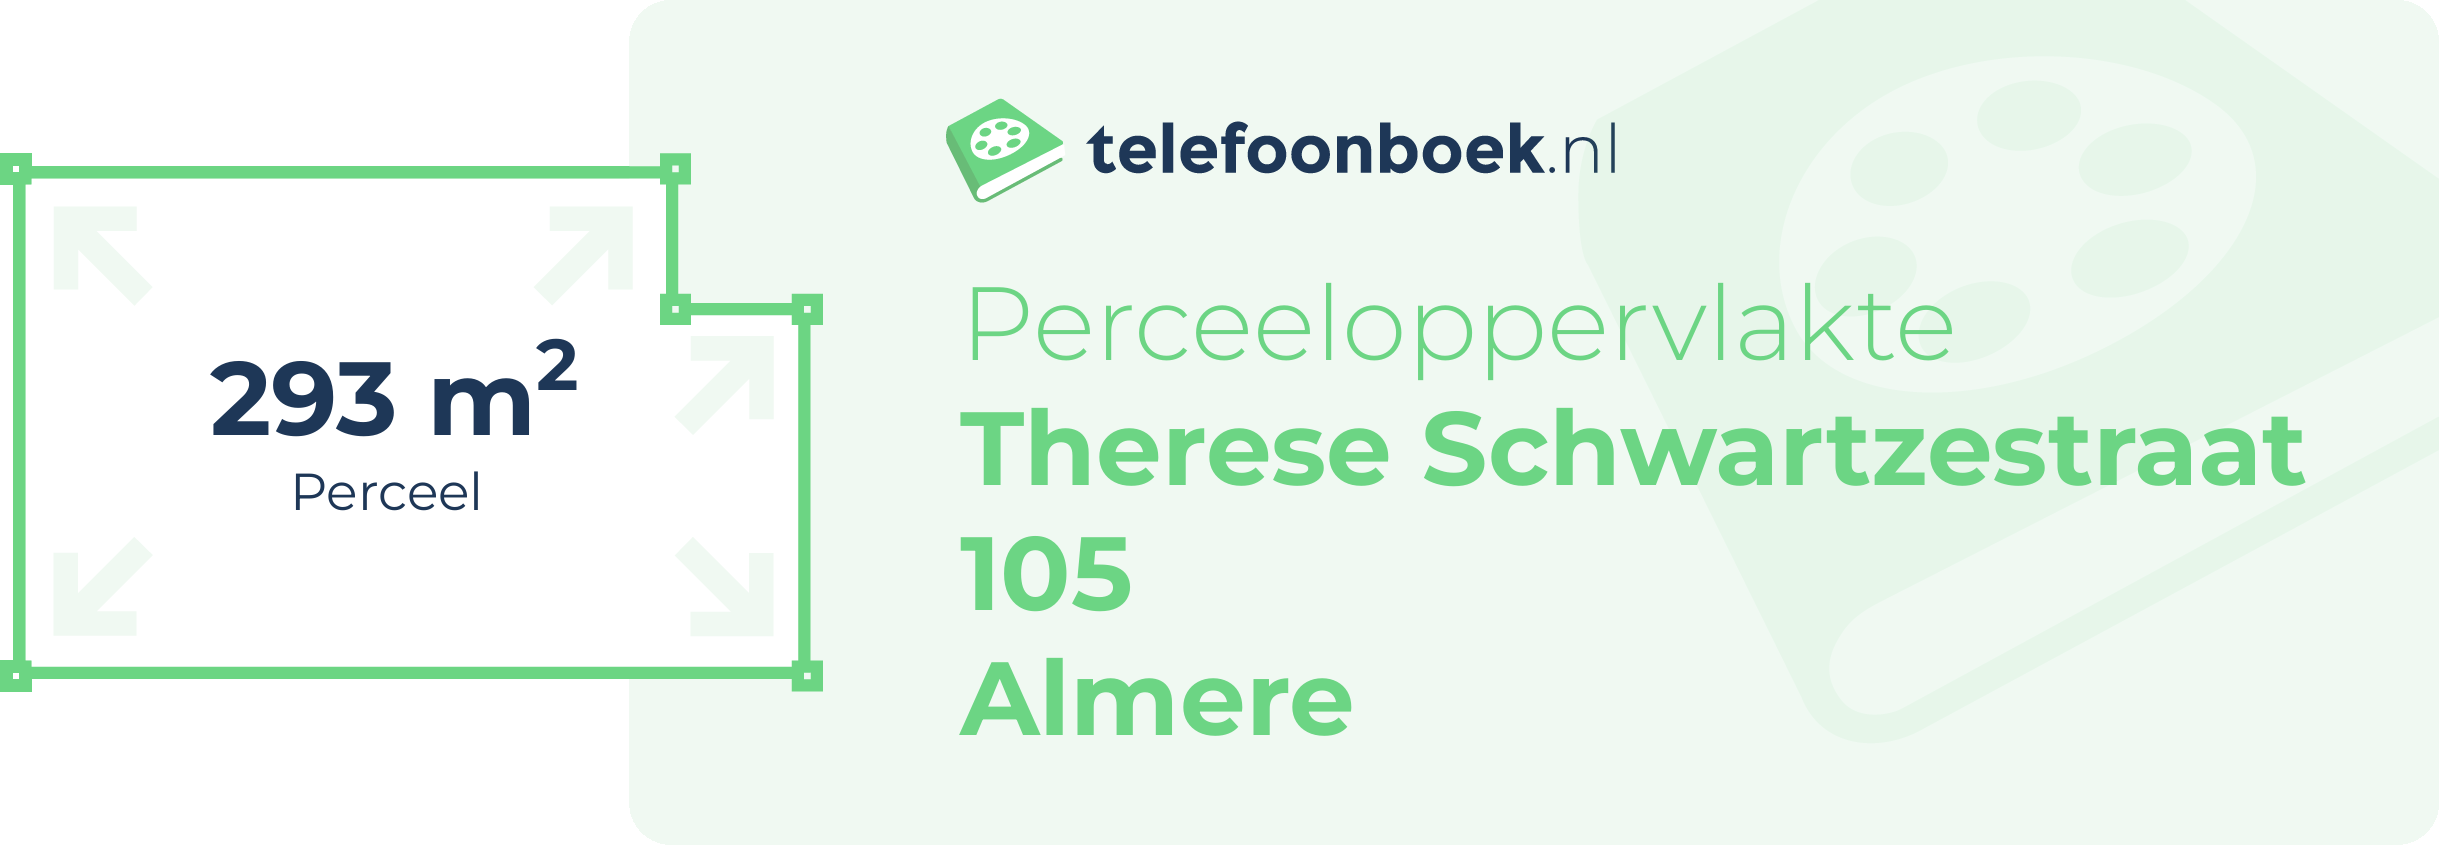 Perceeloppervlakte Therese Schwartzestraat 105 Almere